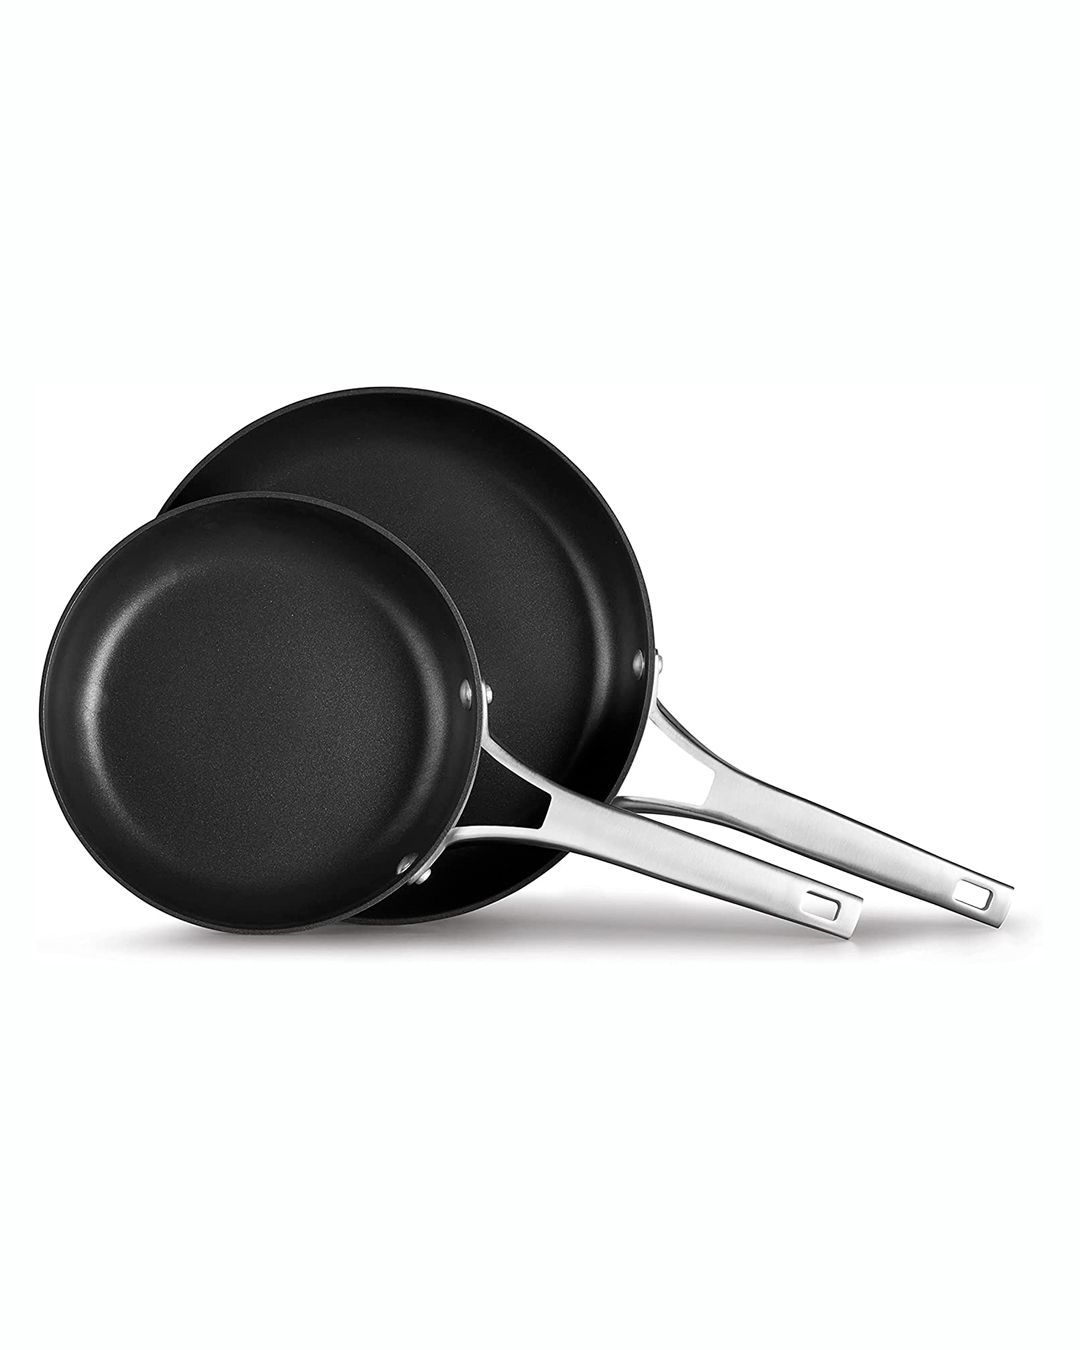 Premier Hard-Anodized Nonstick Frying Pan Set